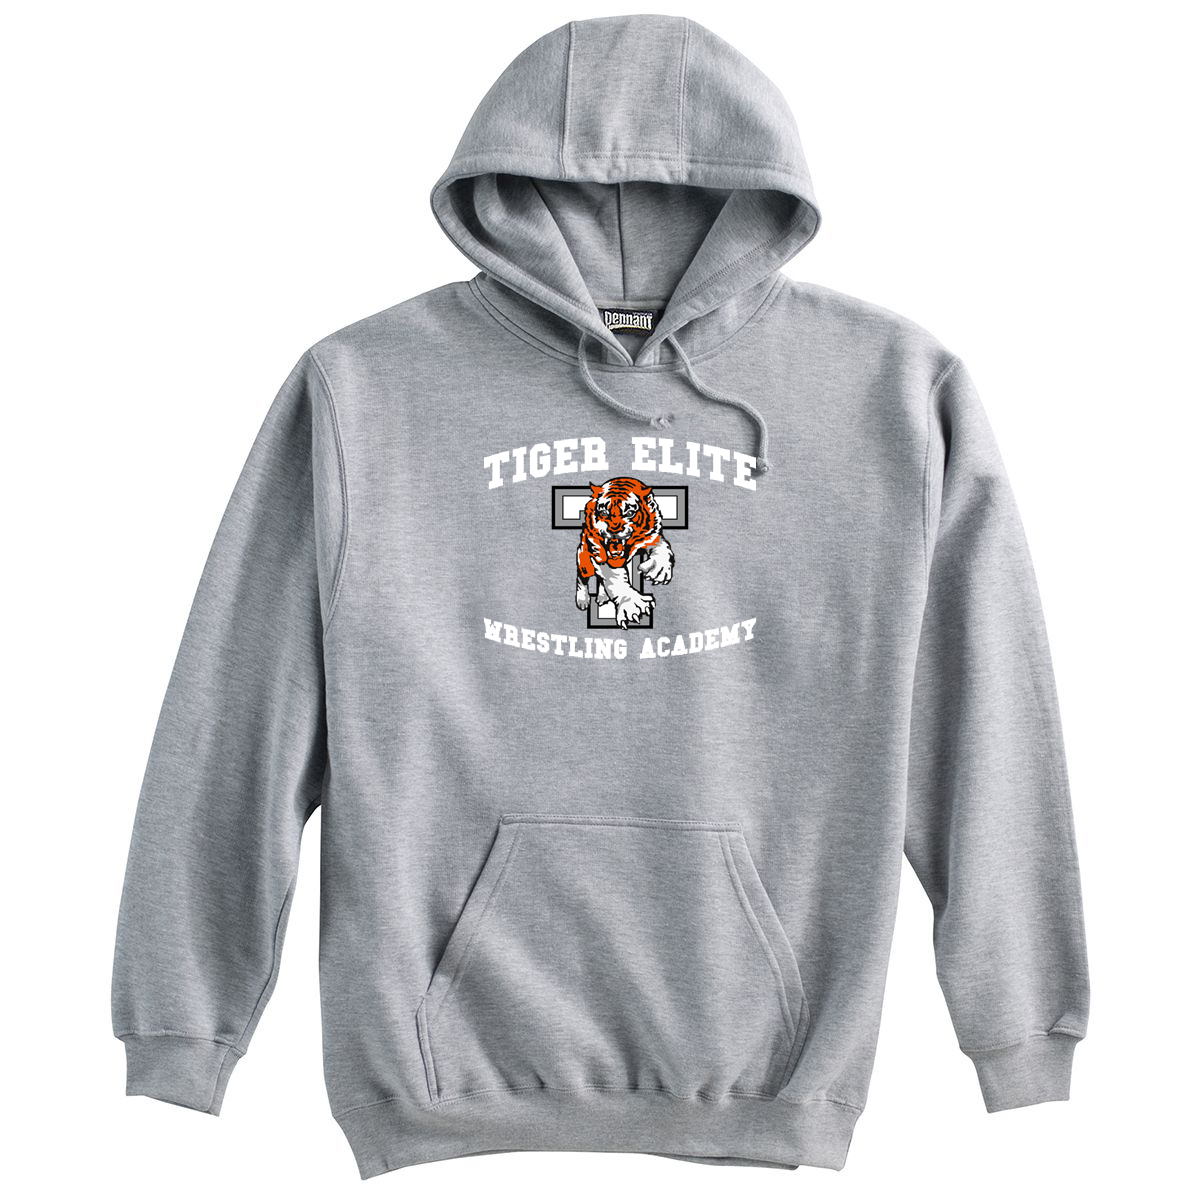 Tiger Elite Wrestling Academy  Sweatshirt